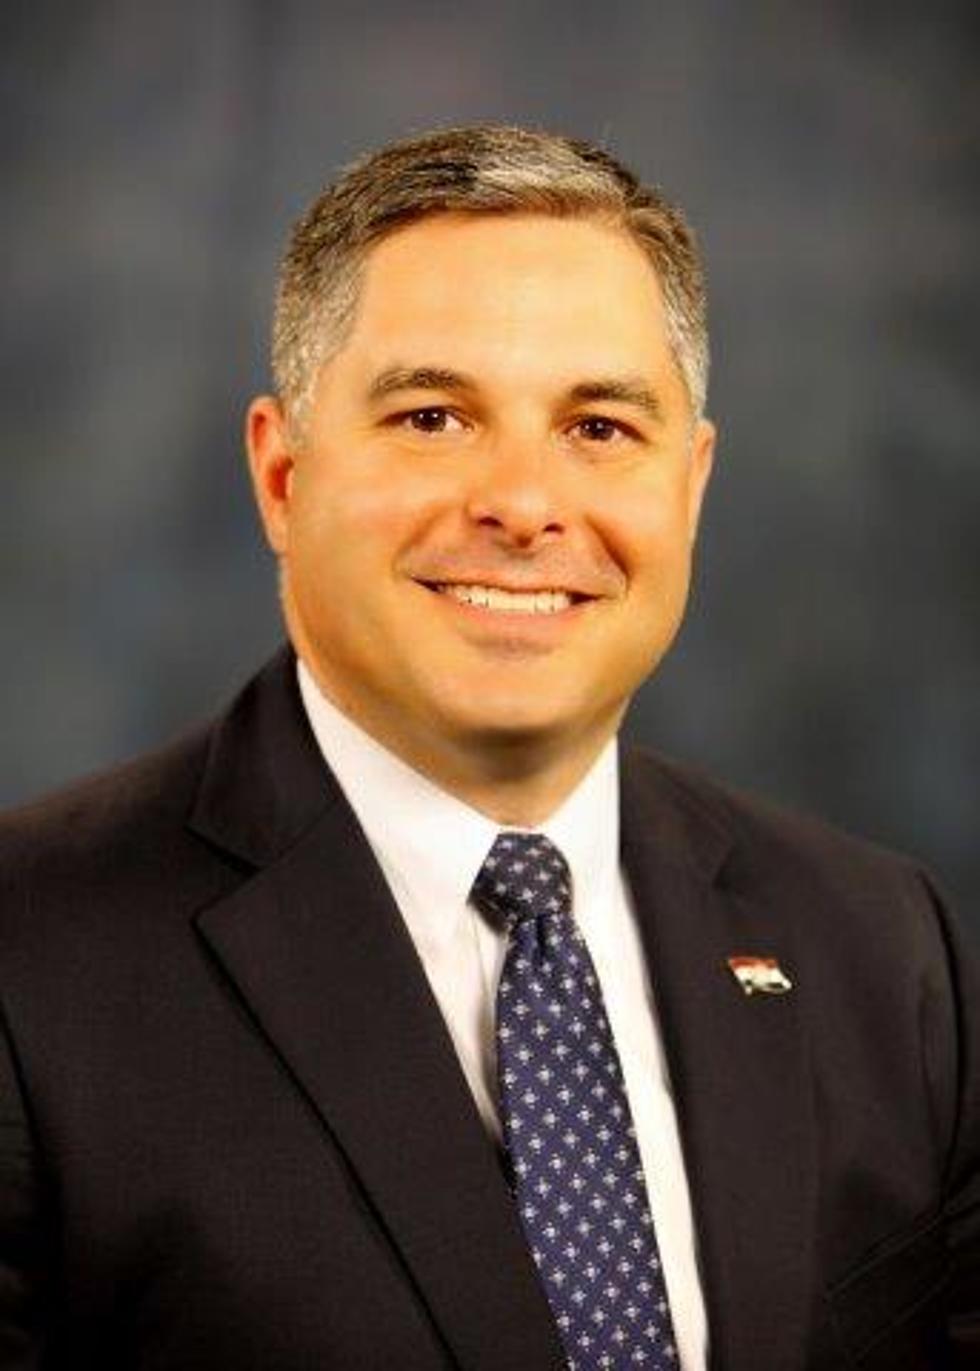 Missouri Economic Development Director Resigns